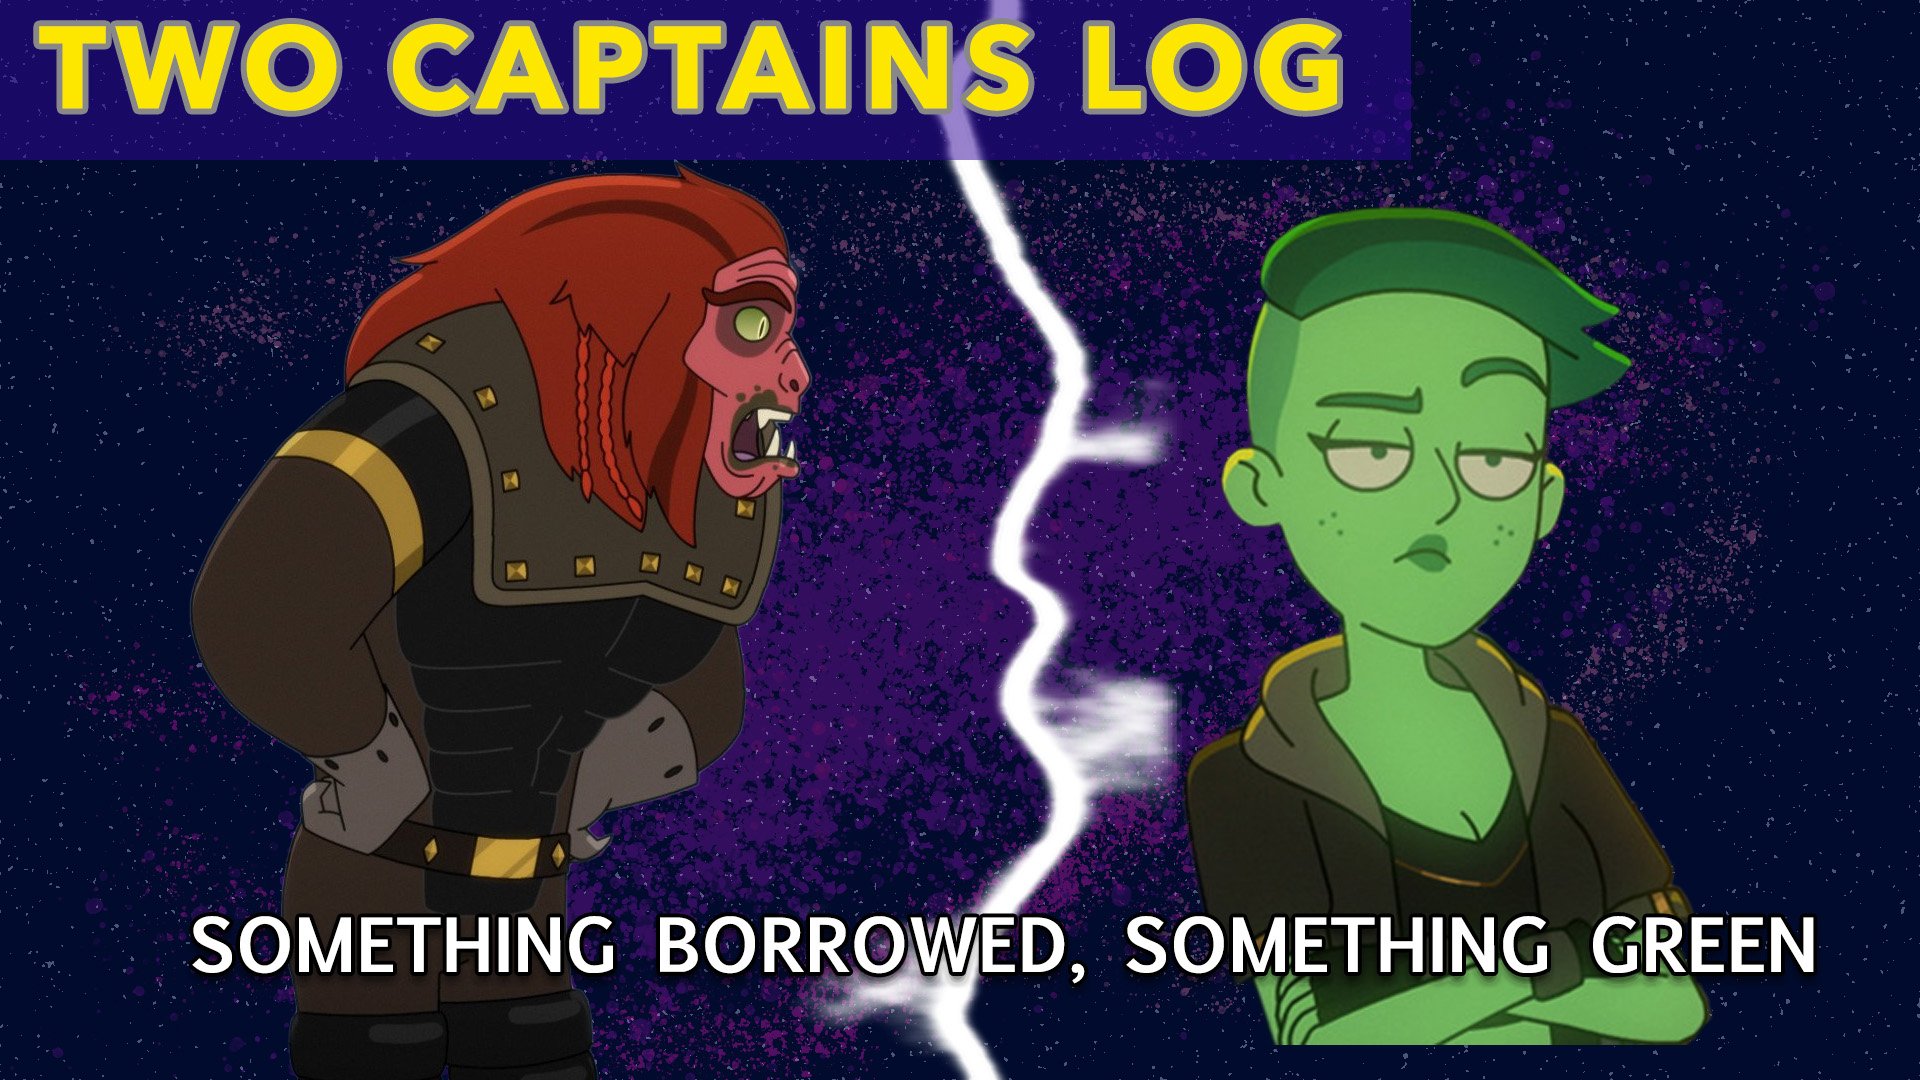 Two Captains Log: “Star Trek: Lower Decks” – S4E4 “Something Borrowed, Something Green” Review